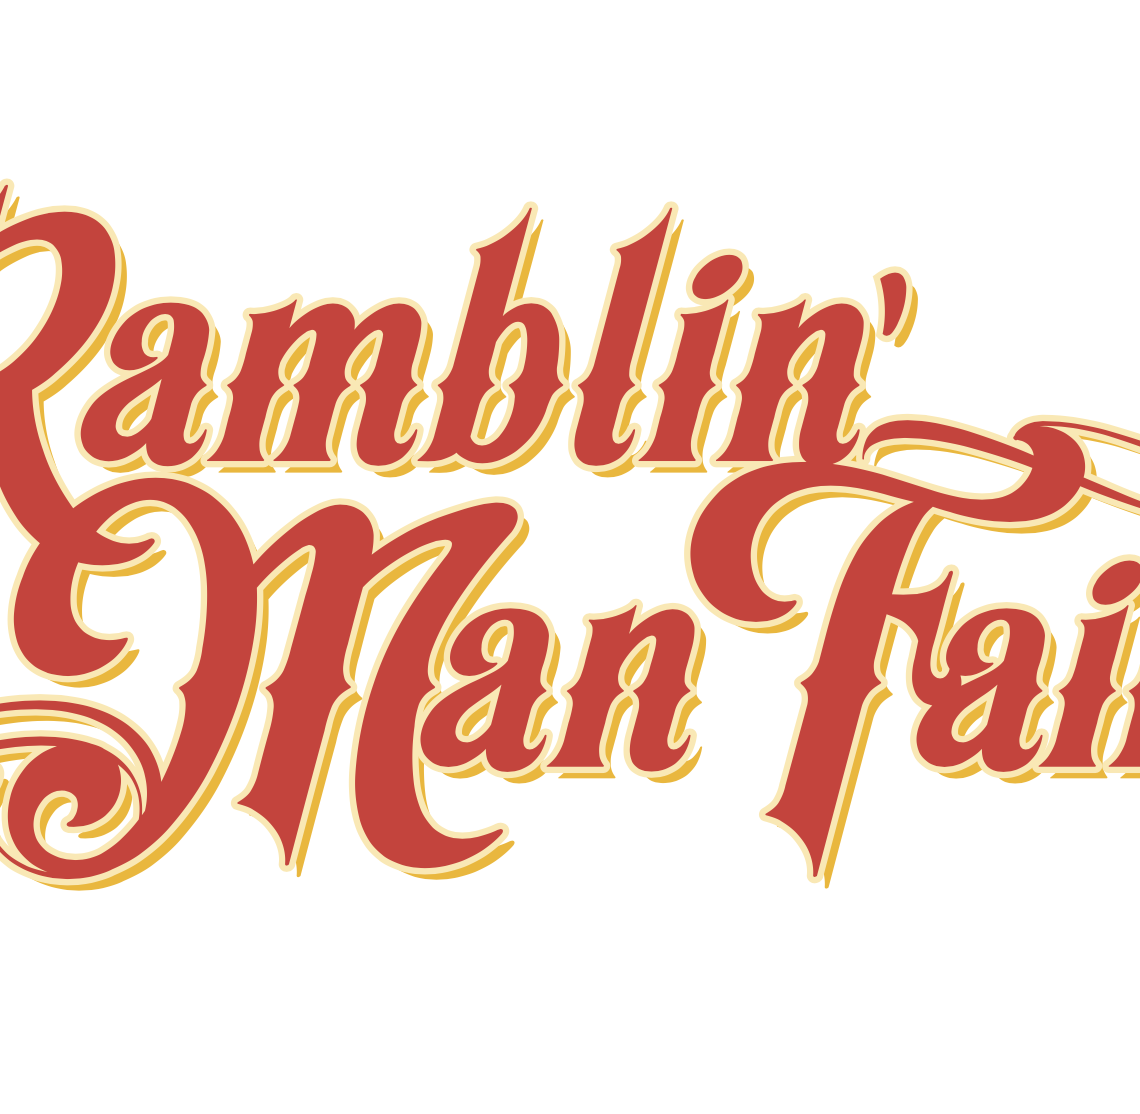 Ramblin’ Man Fair – New Line Up Announcement